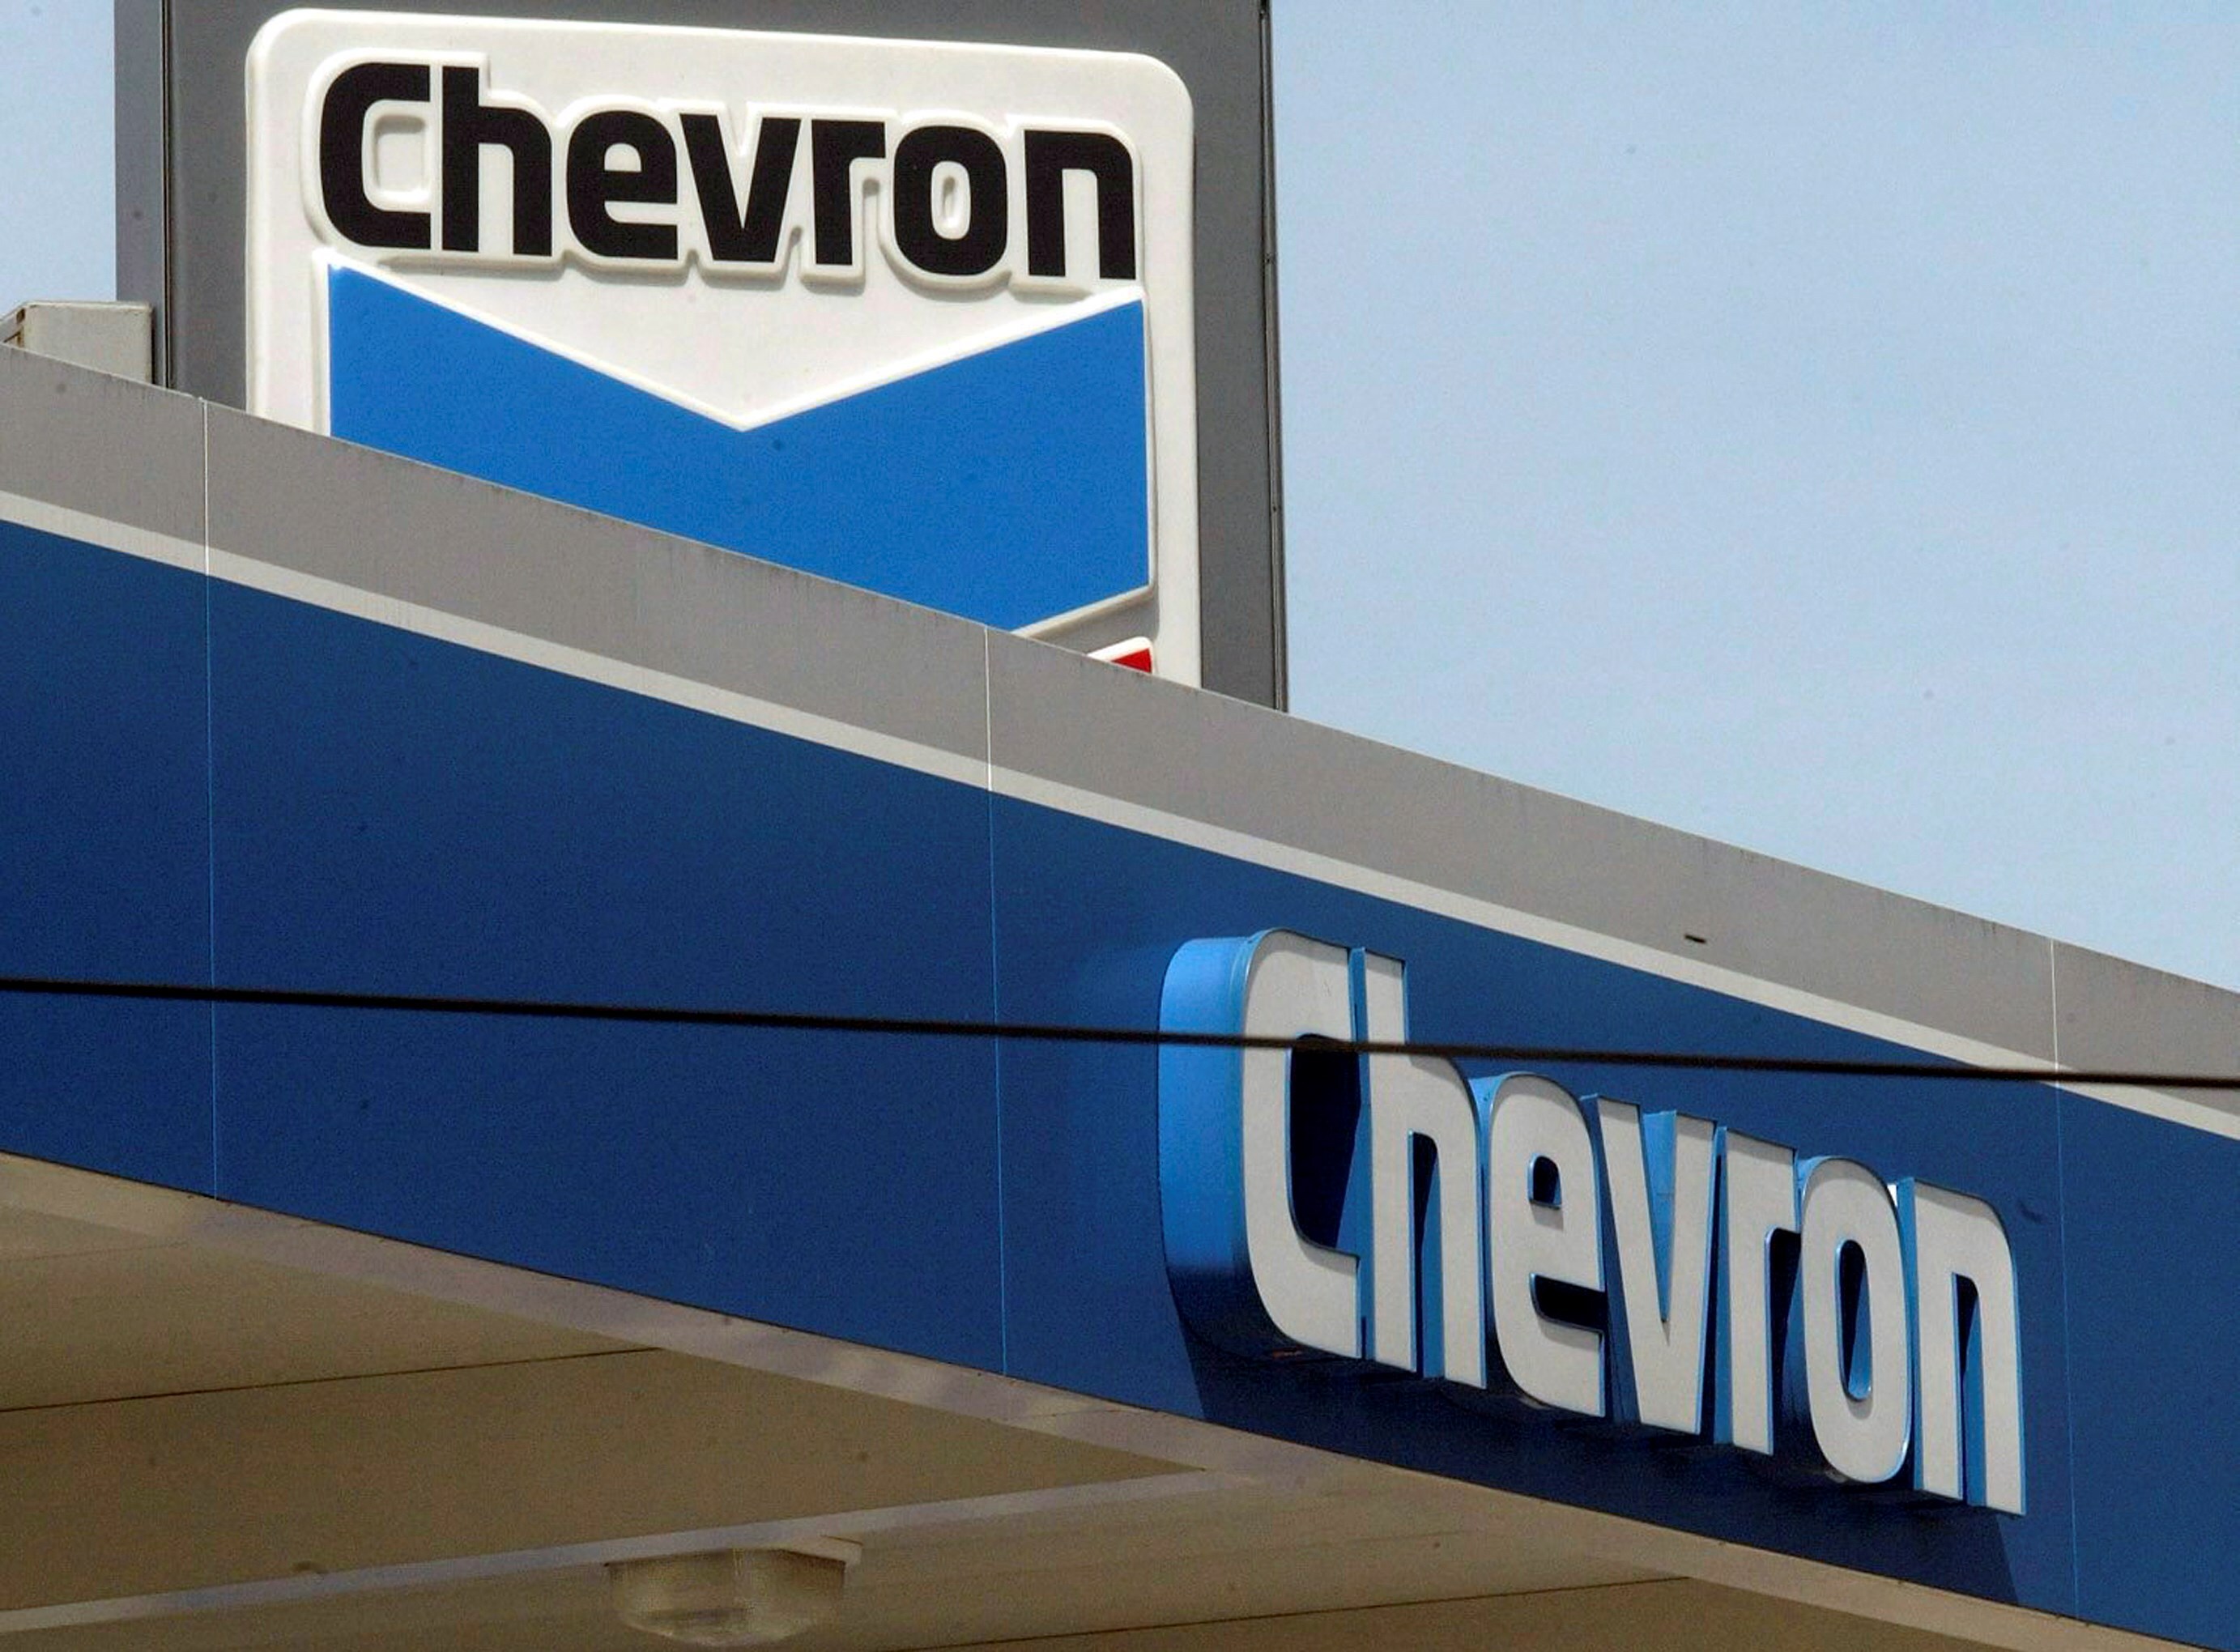 The oil company Chevron will return to operate in Venezuela (EFE/Brendan Mcdermid)